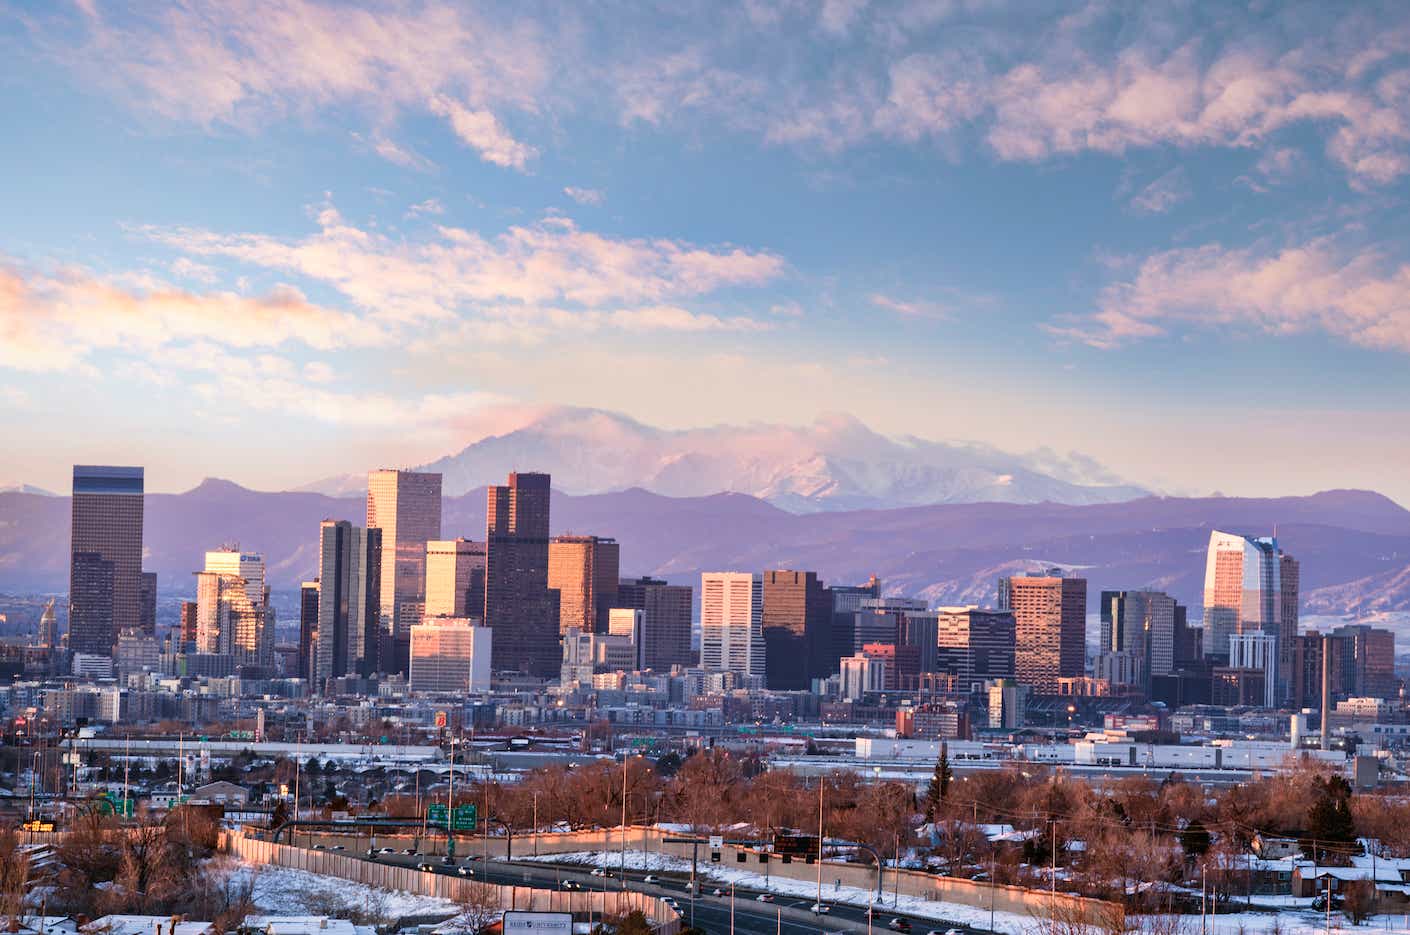 Downtown Denver, Colorado set against the backdrop of mountains.